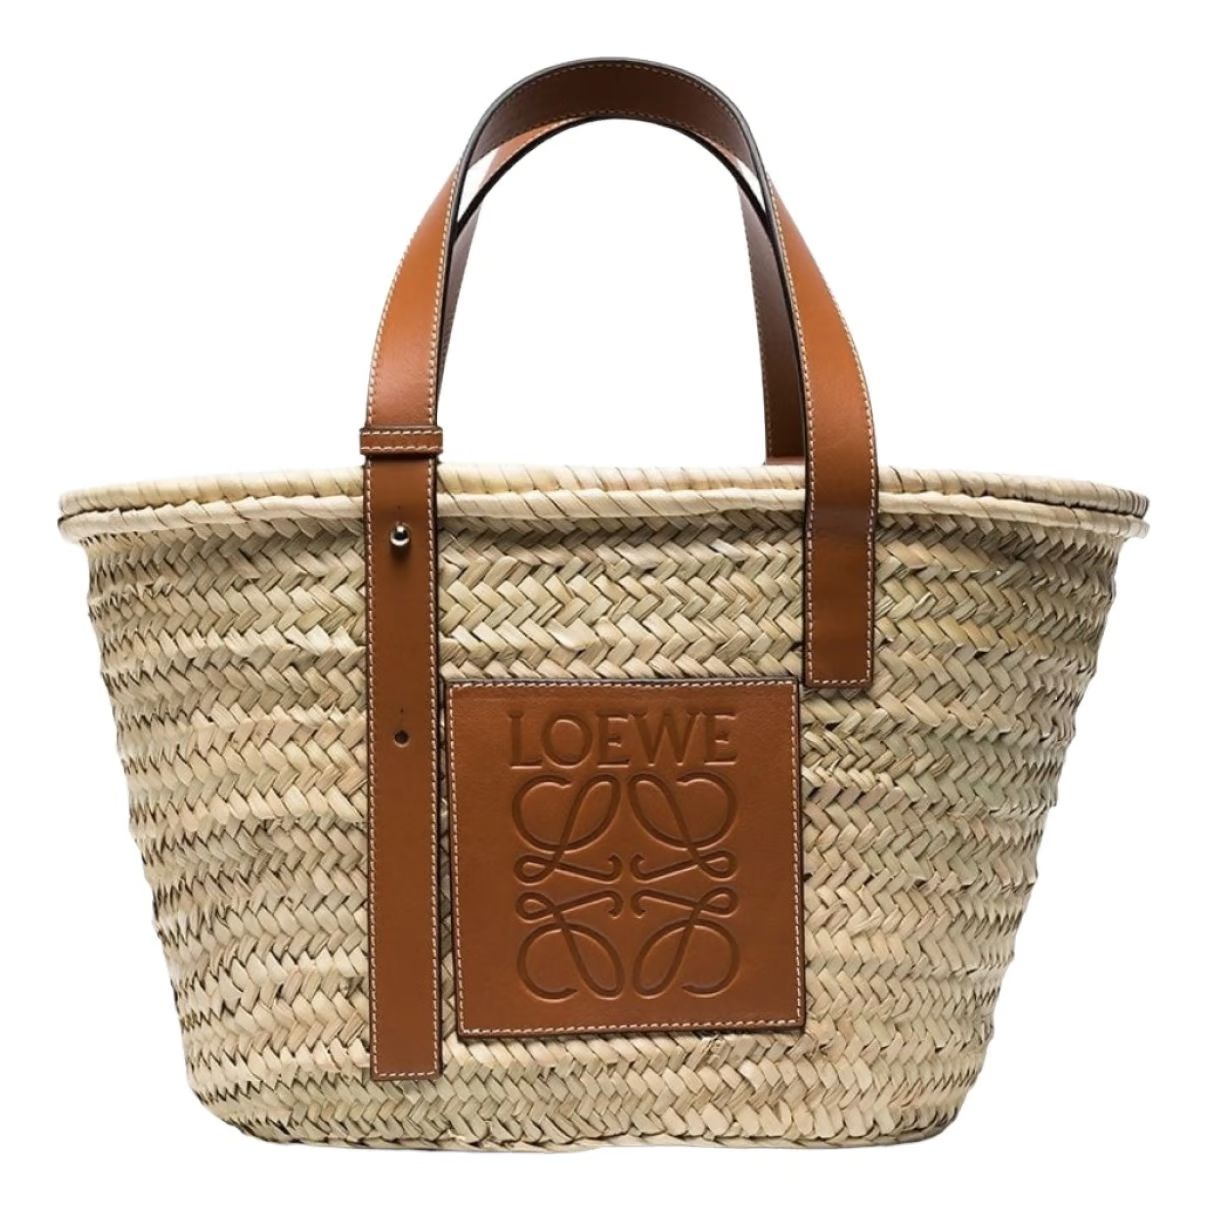 Loewe Basket Bag leather tote | Vestiaire Collective (Global)